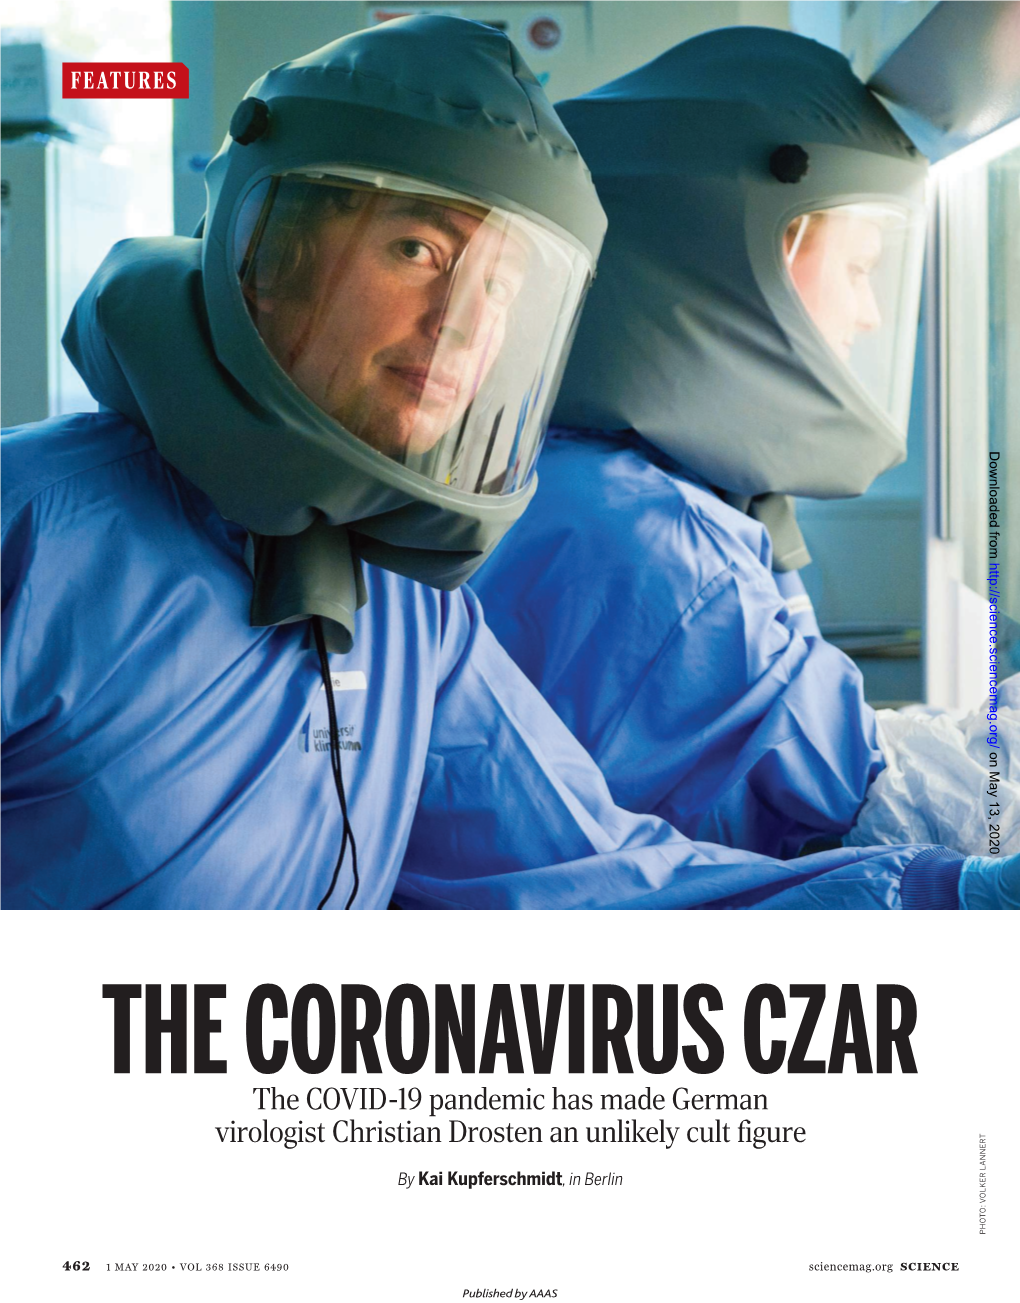 THE CORONAVIRUS CZAR the COVID-19 Pandemic Has Made German Virologist Christian Drosten an Unlikely Cult Figure